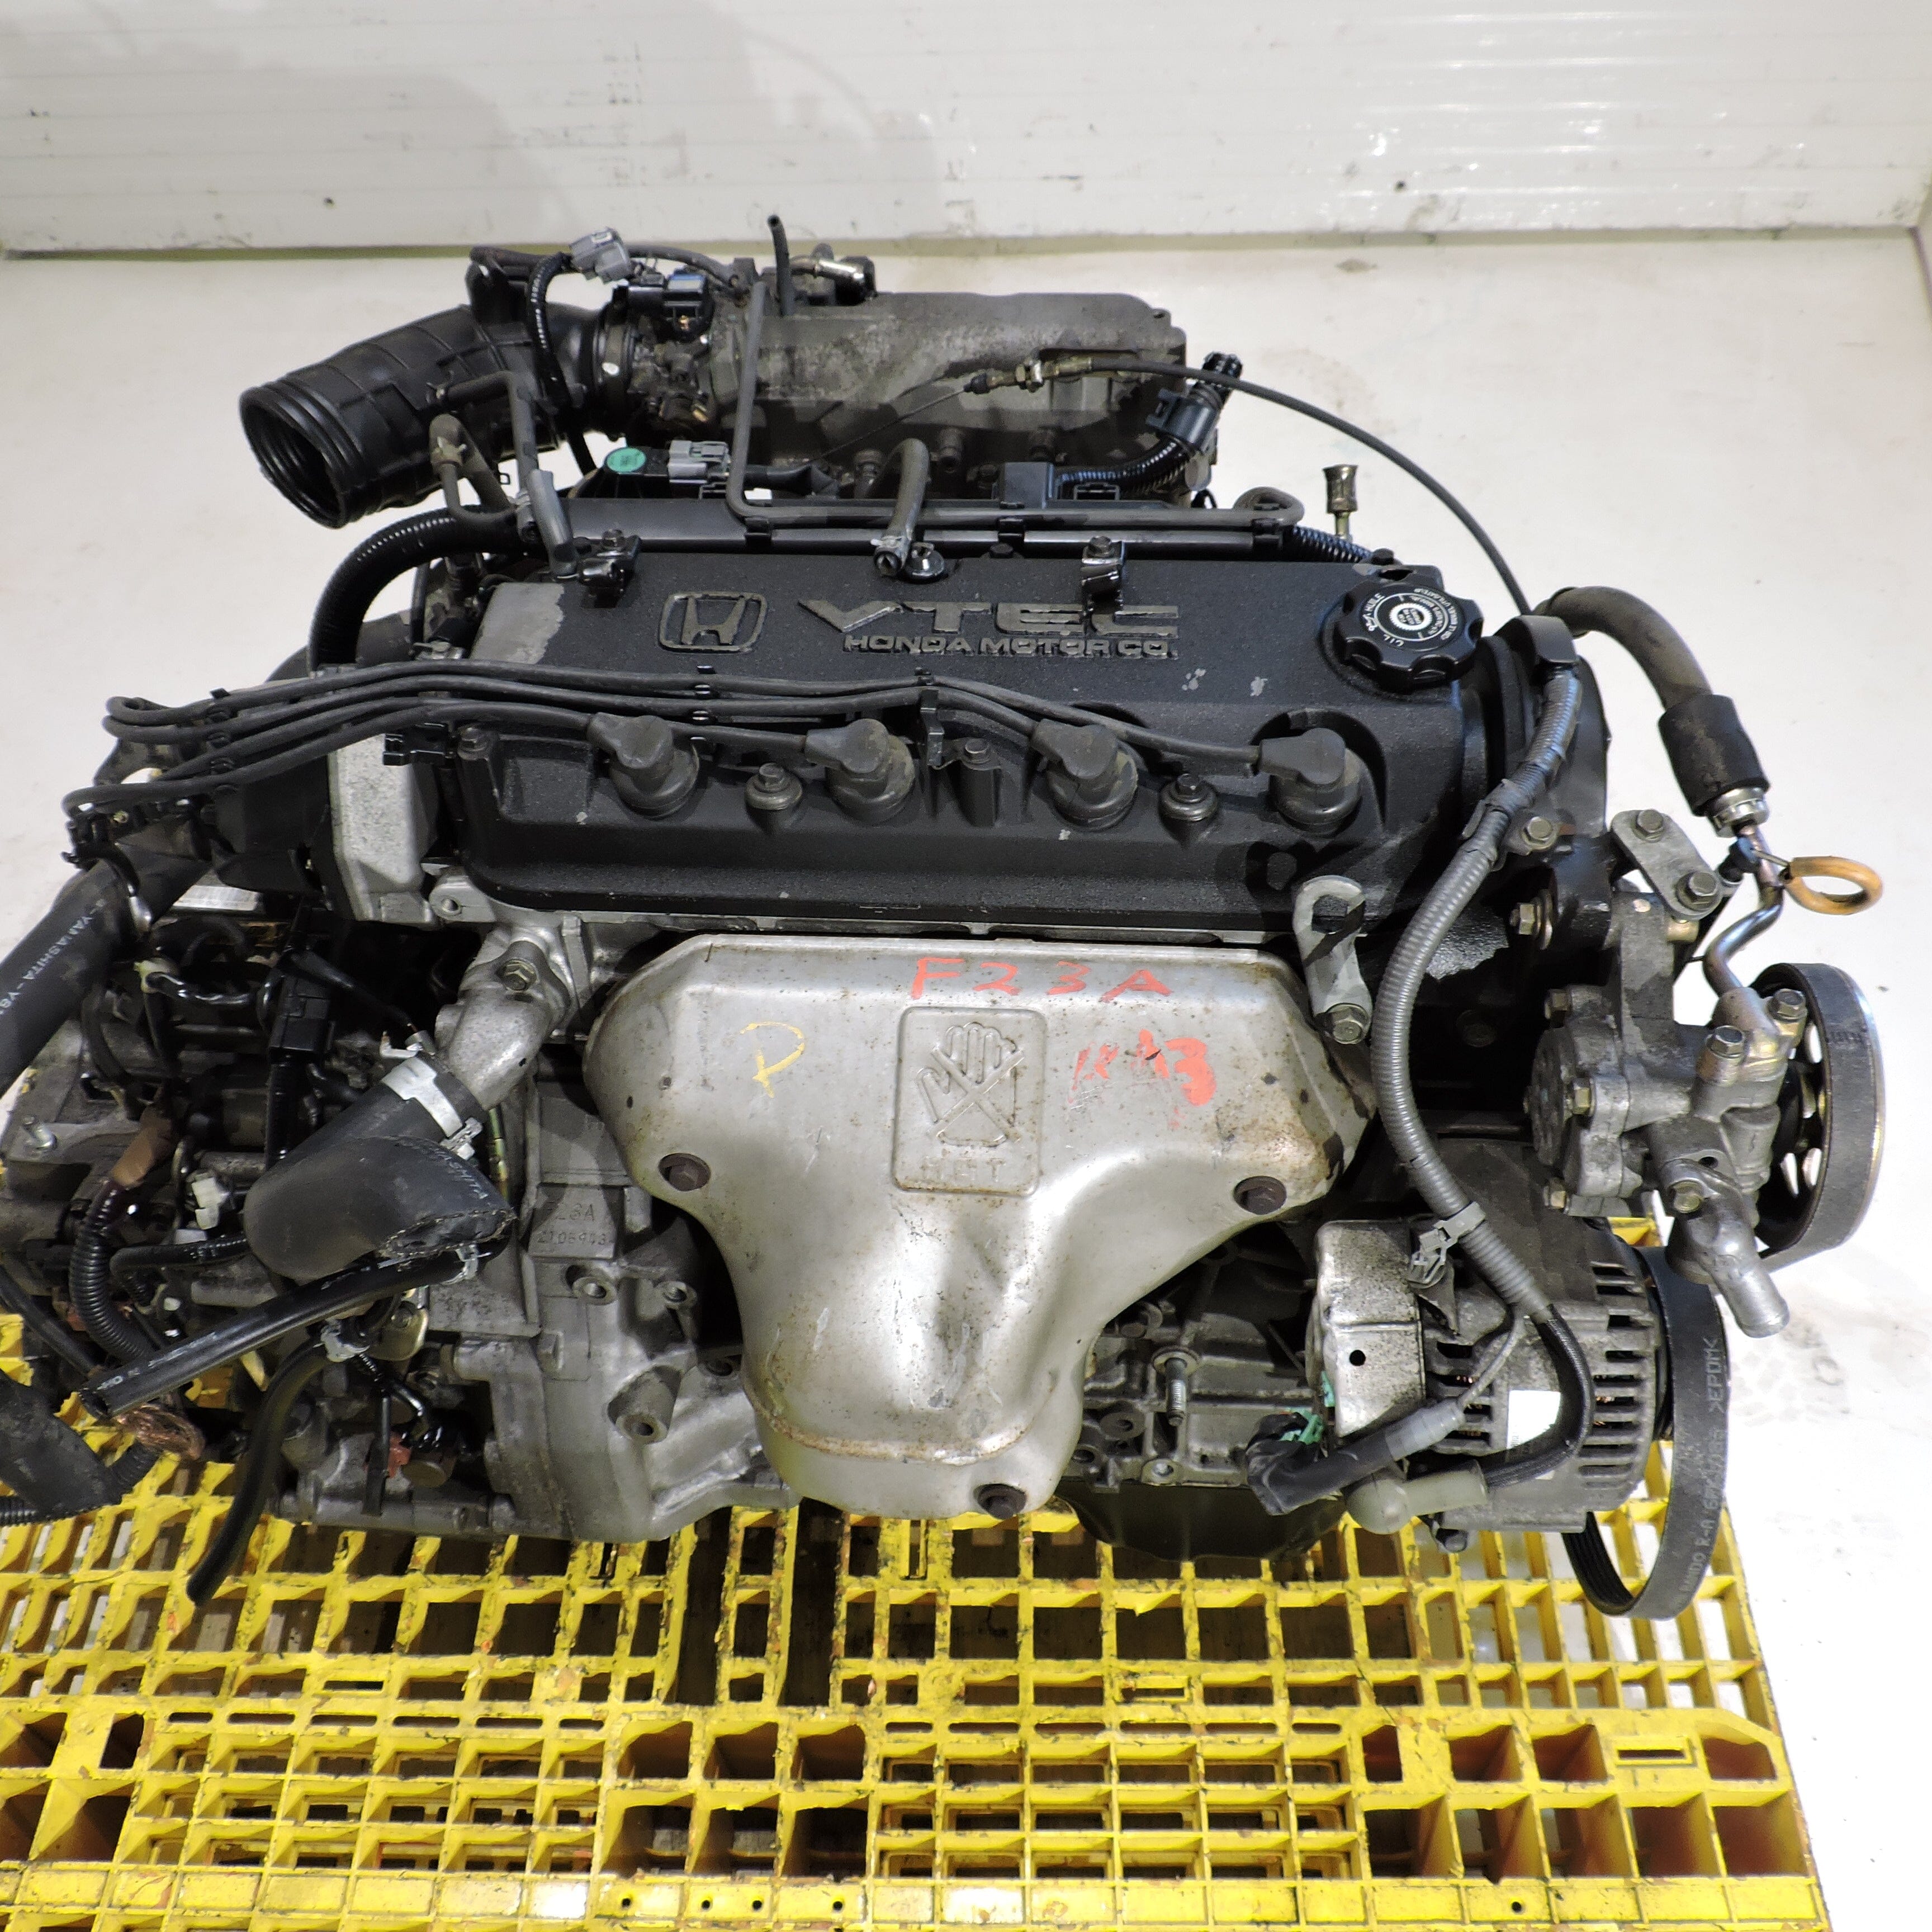 Honda Accord 1998-2002 2.3L JDM Sohc Vtec Engine Only - F23a